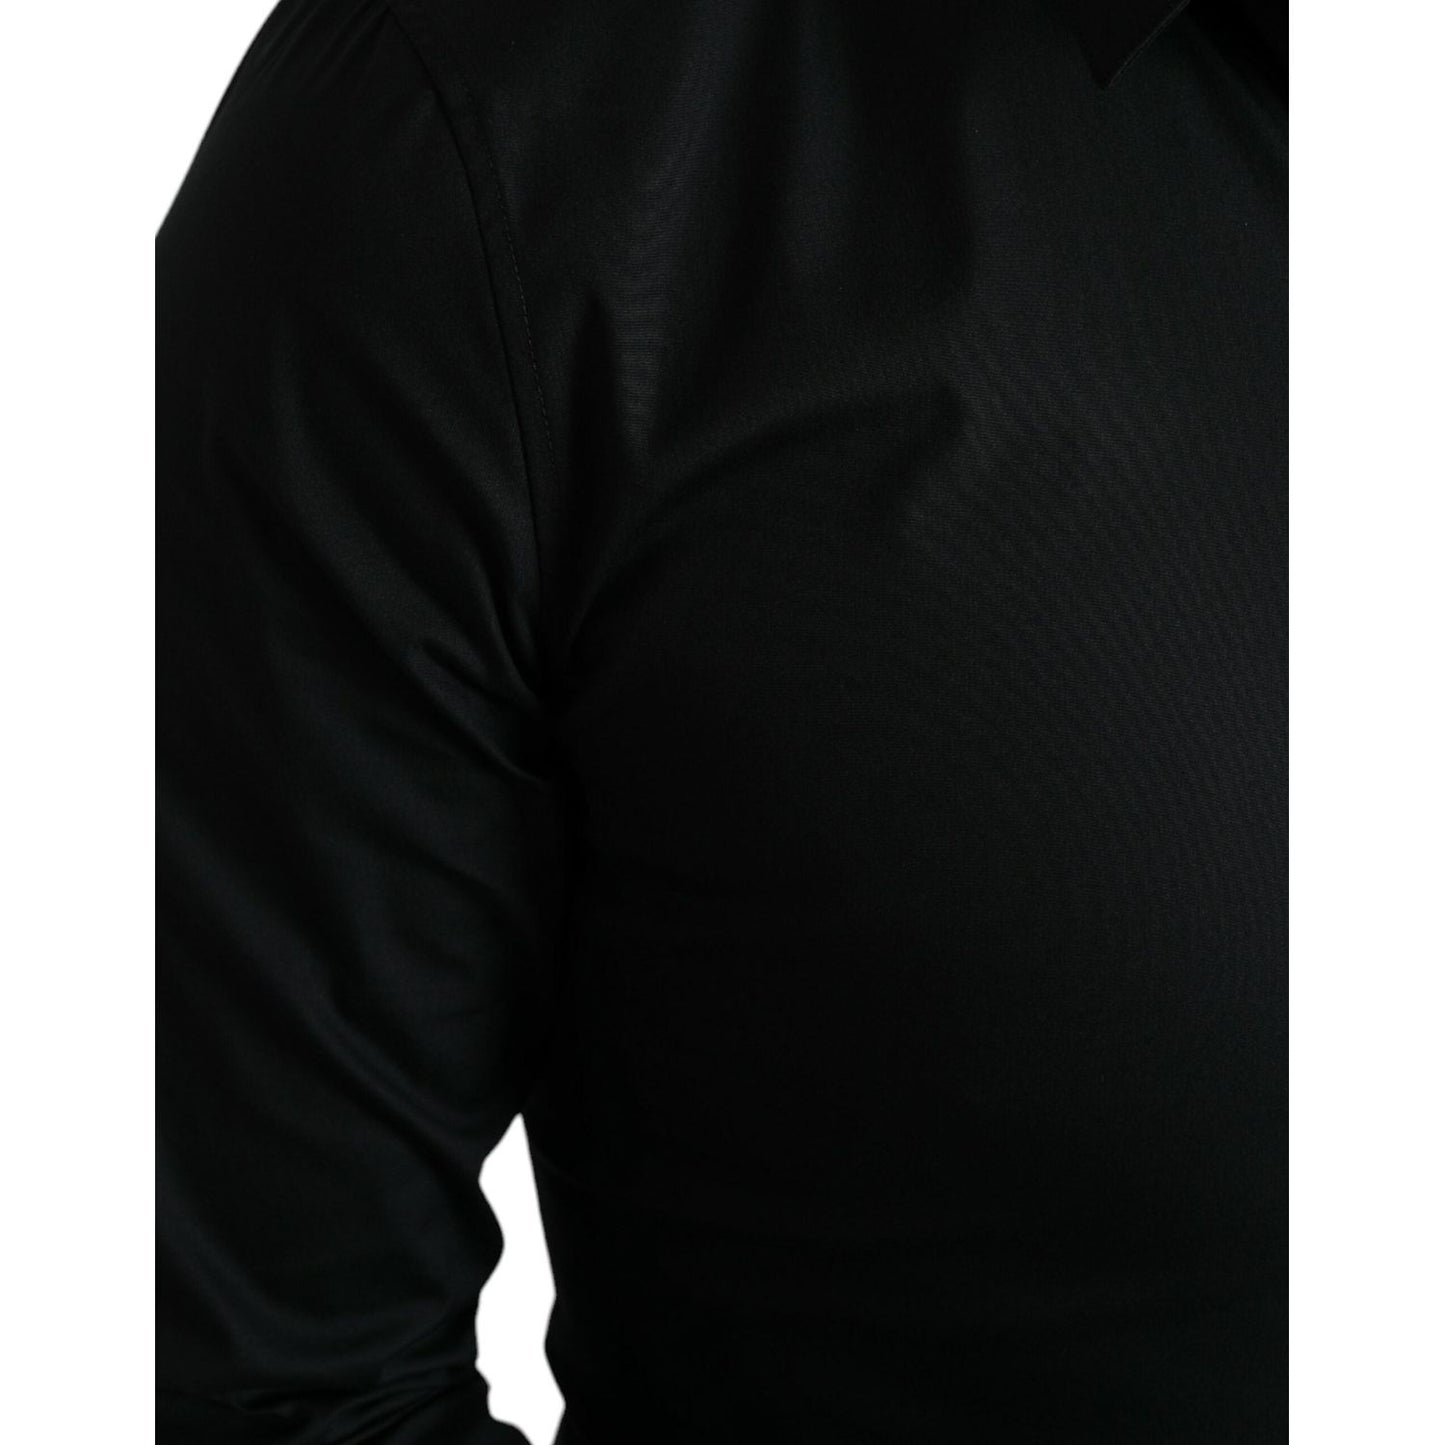 Dolce & Gabbana Elegant Black Slim Fit Italian Dress Shirt black-cotton-stretch-slim-formal-dress-shirt